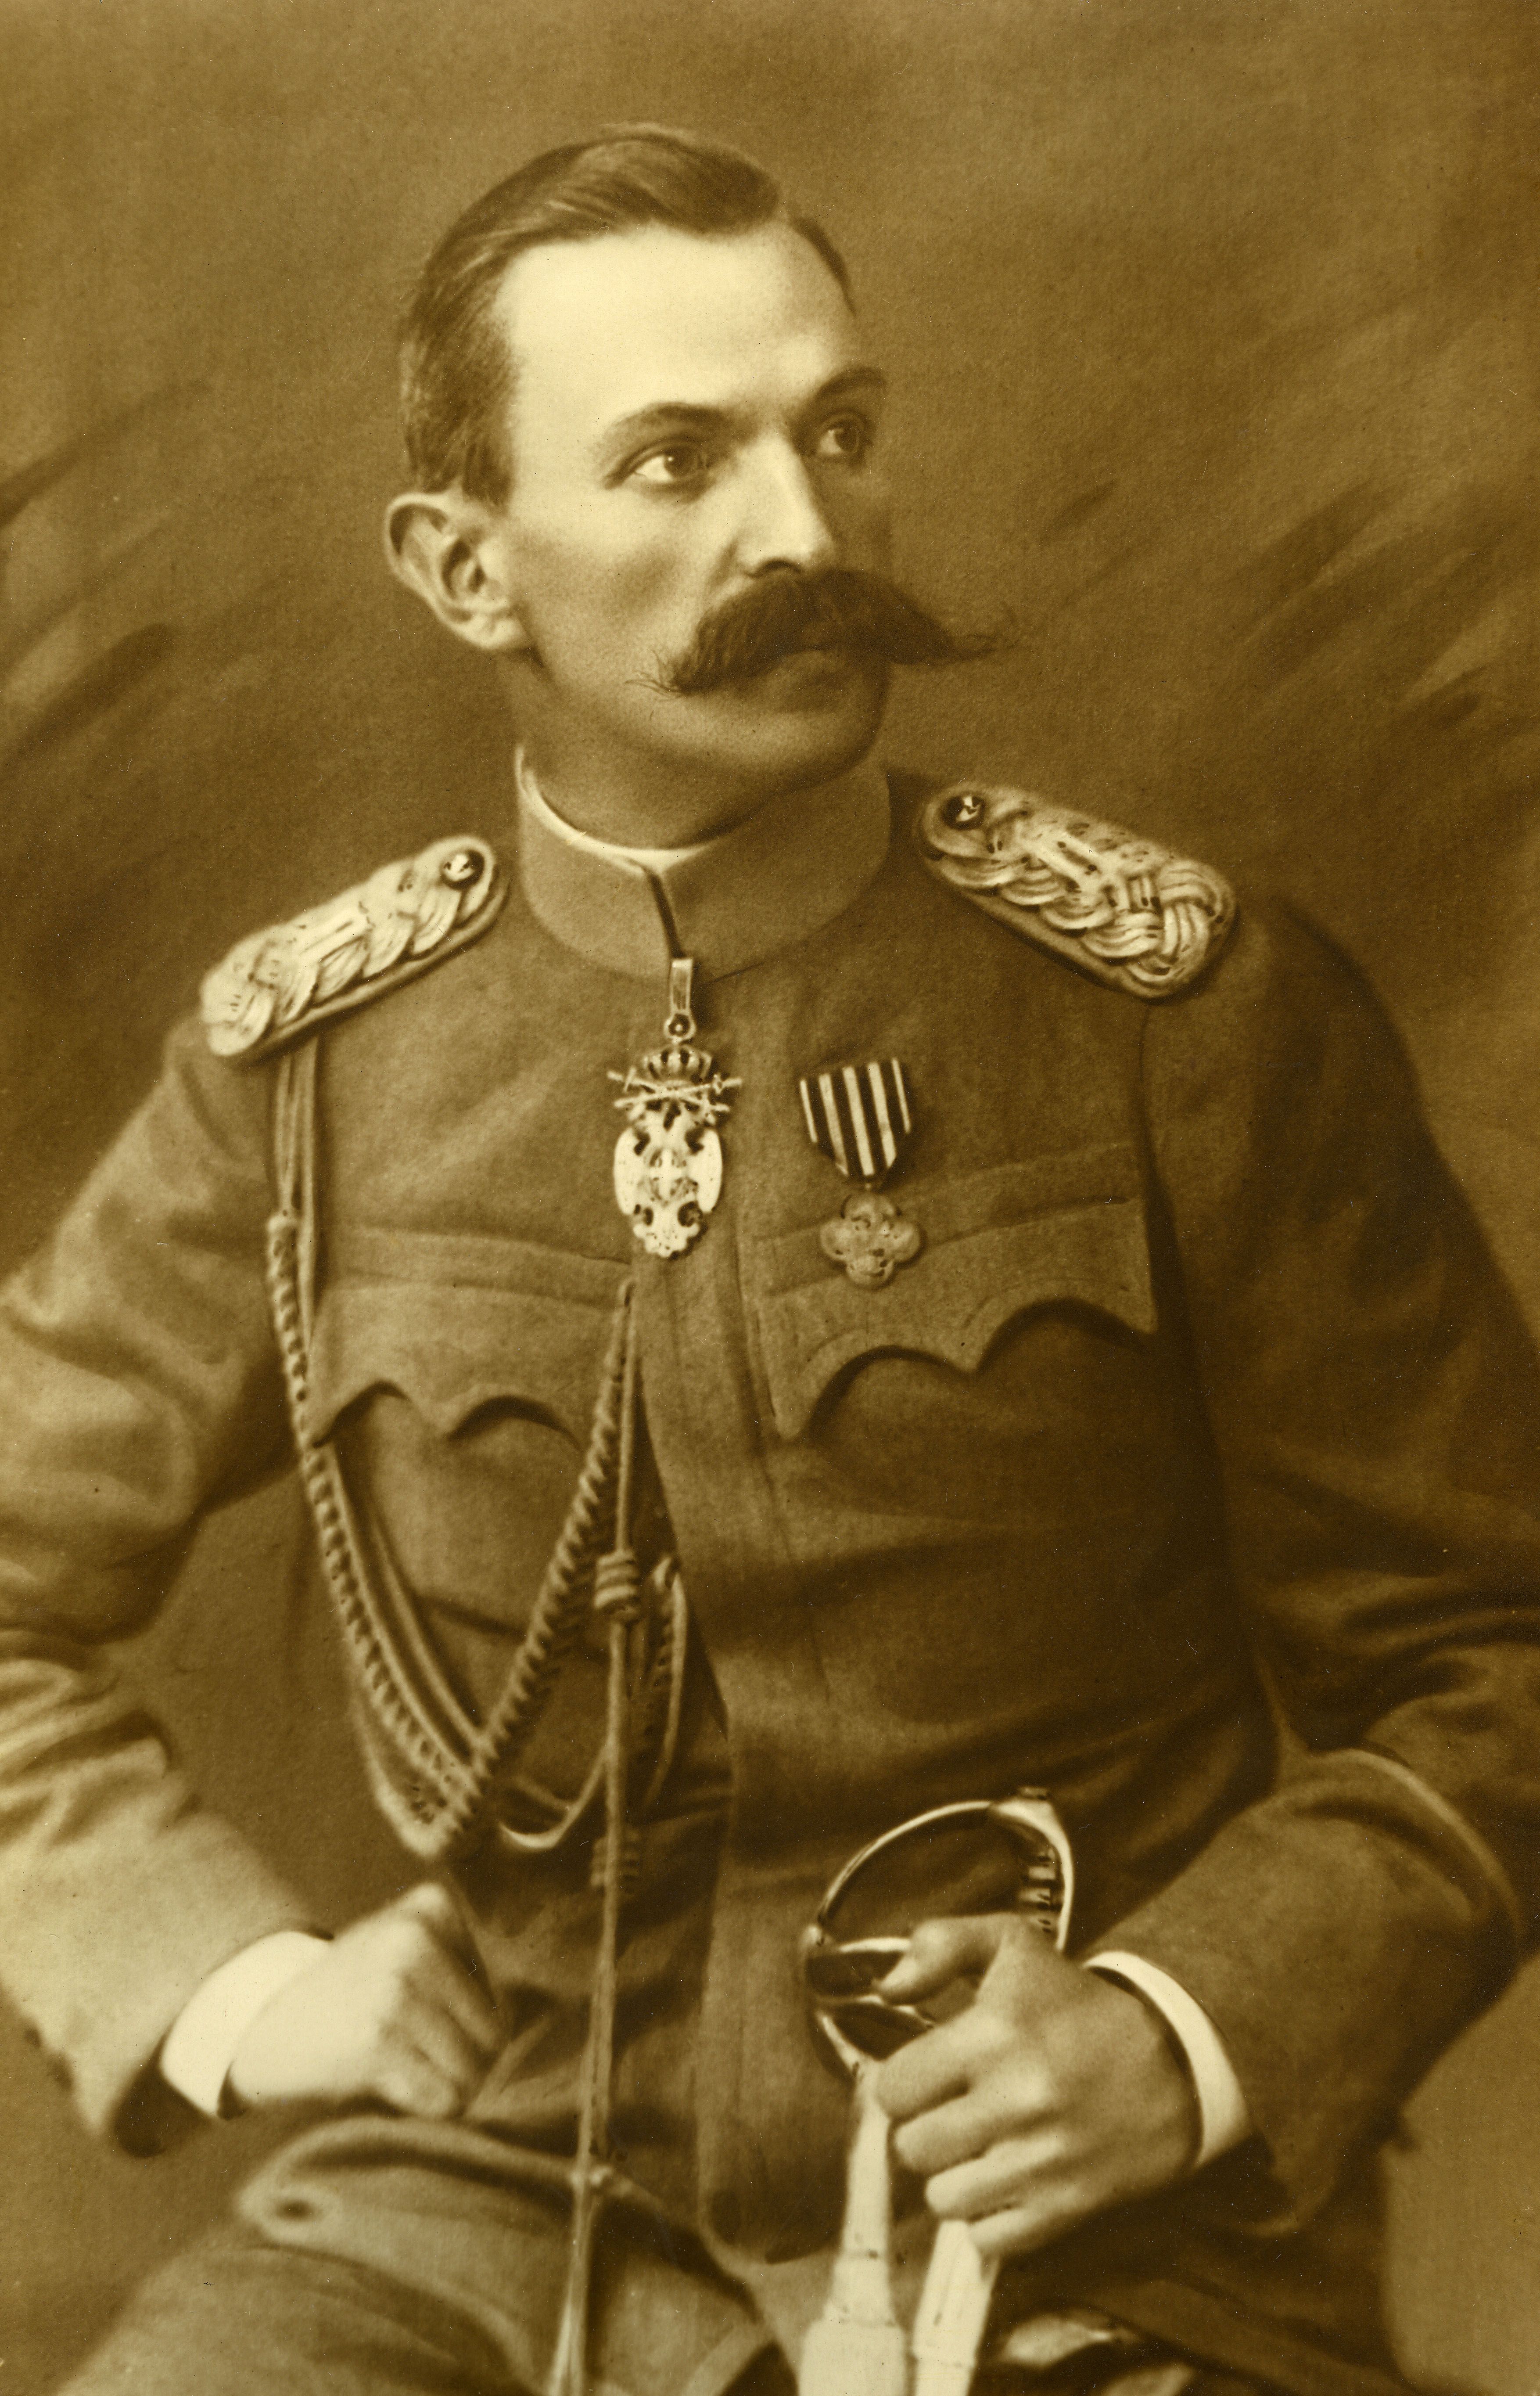 Portret generala Rudolfa Maistra